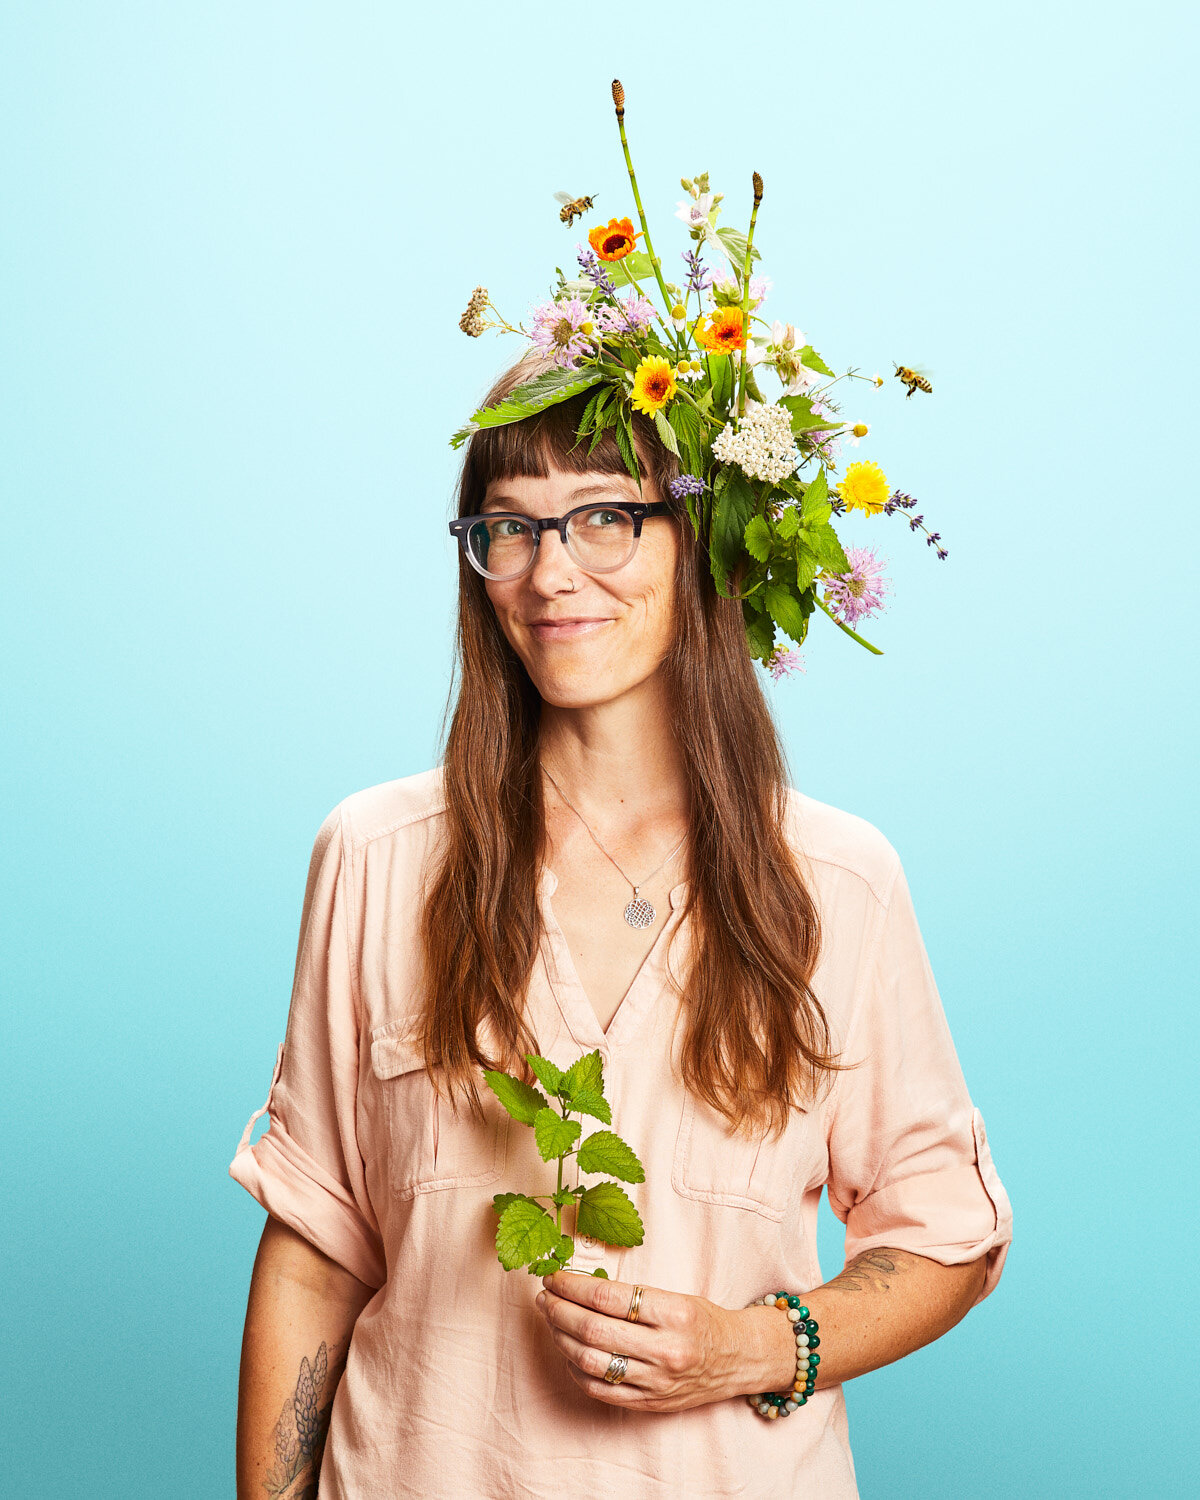 whimsical studio portrait of woman with beautiful flower headpiece by creative portrait photographer Hanna Agar